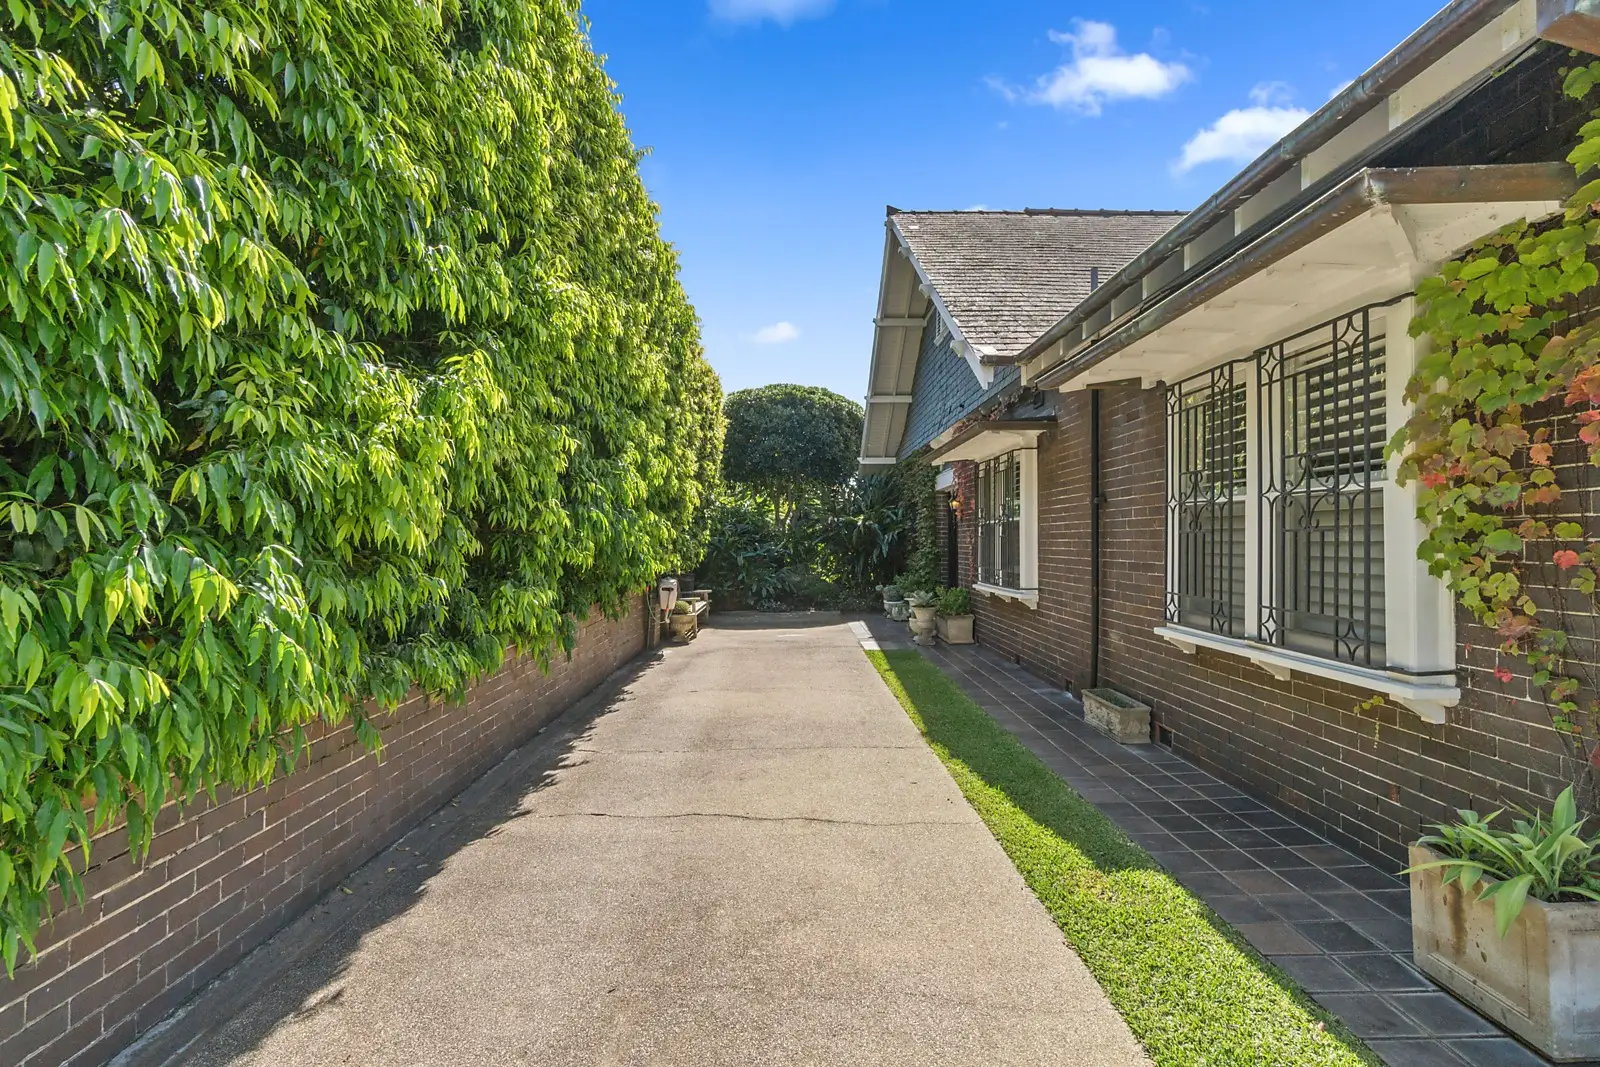 Photo #3: 18 Drumalbyn Road, Bellevue Hill - Sold by Sydney Sotheby's International Realty